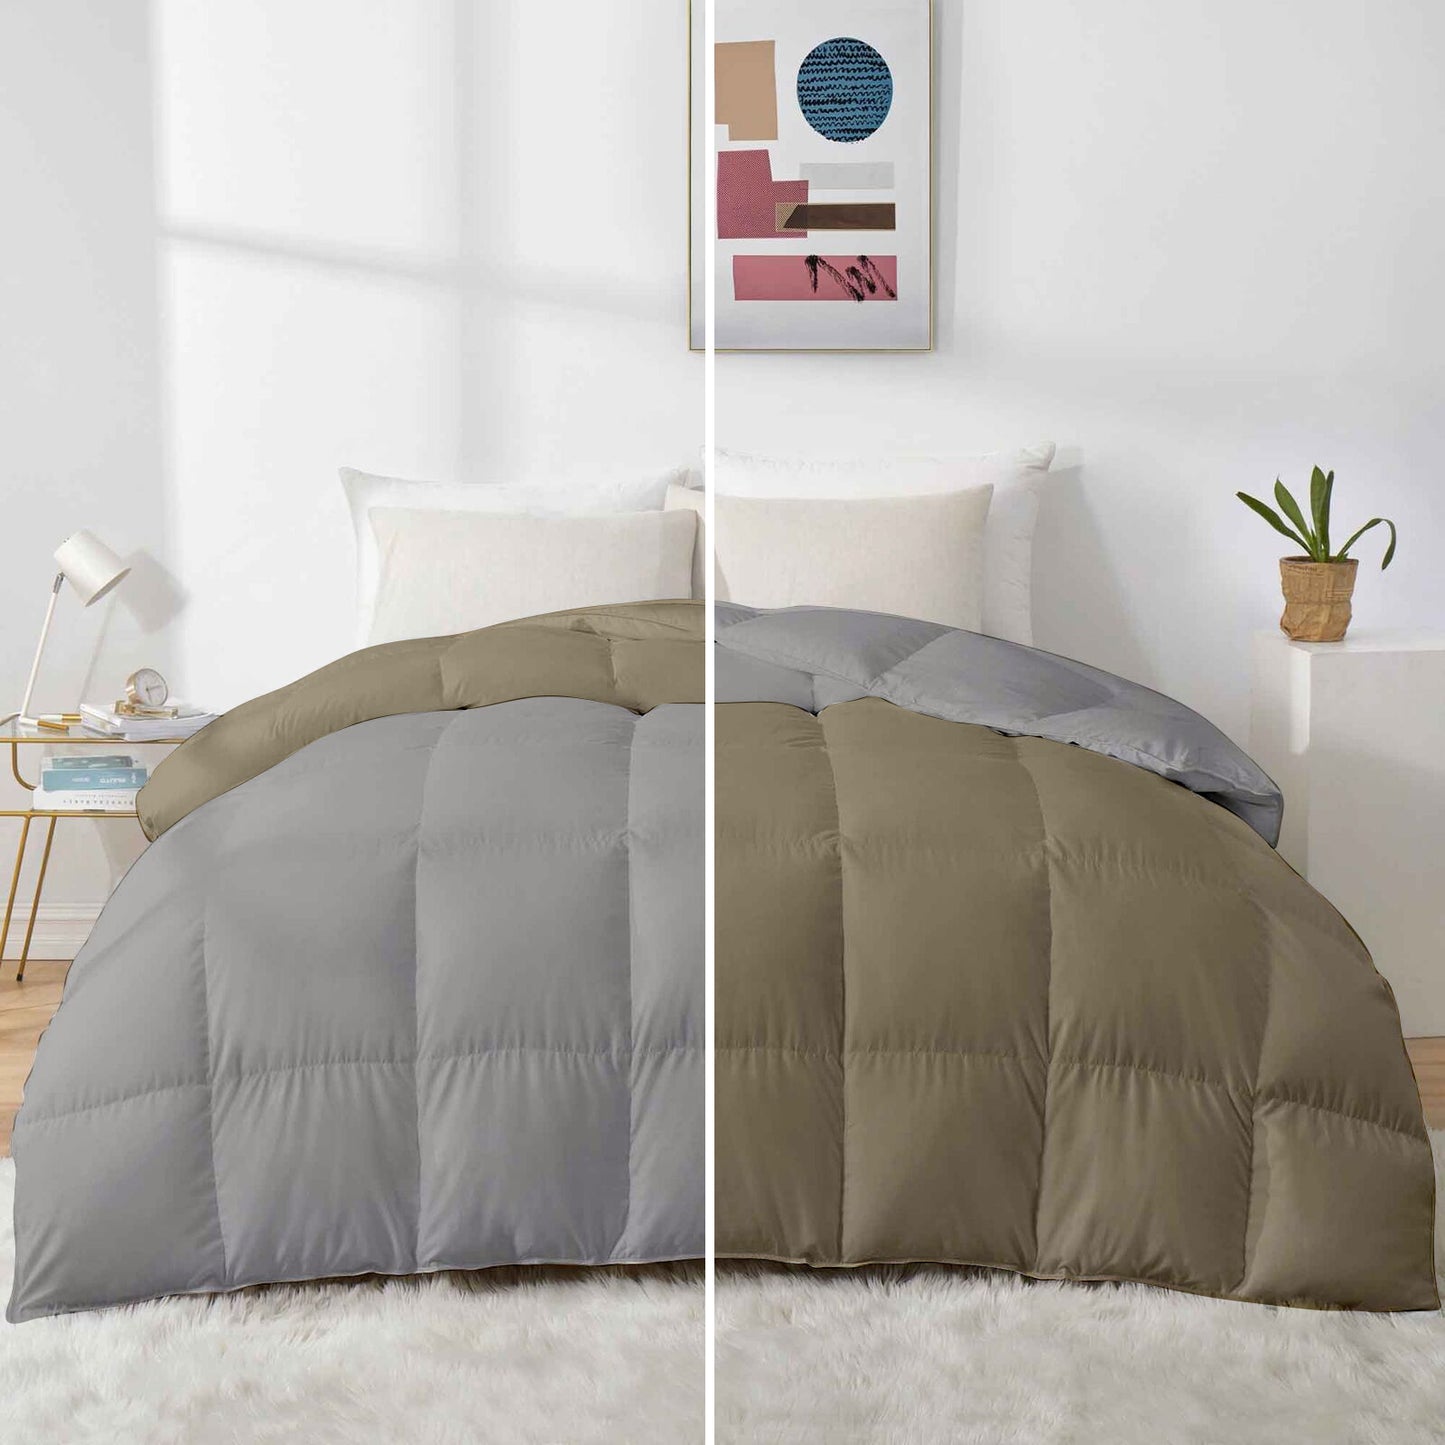 Razzai - 500 GSM Soft Hotel Quality-Down Alternative Reversible Comforter/Microfiber Quilt Blanket |Silver/Peach